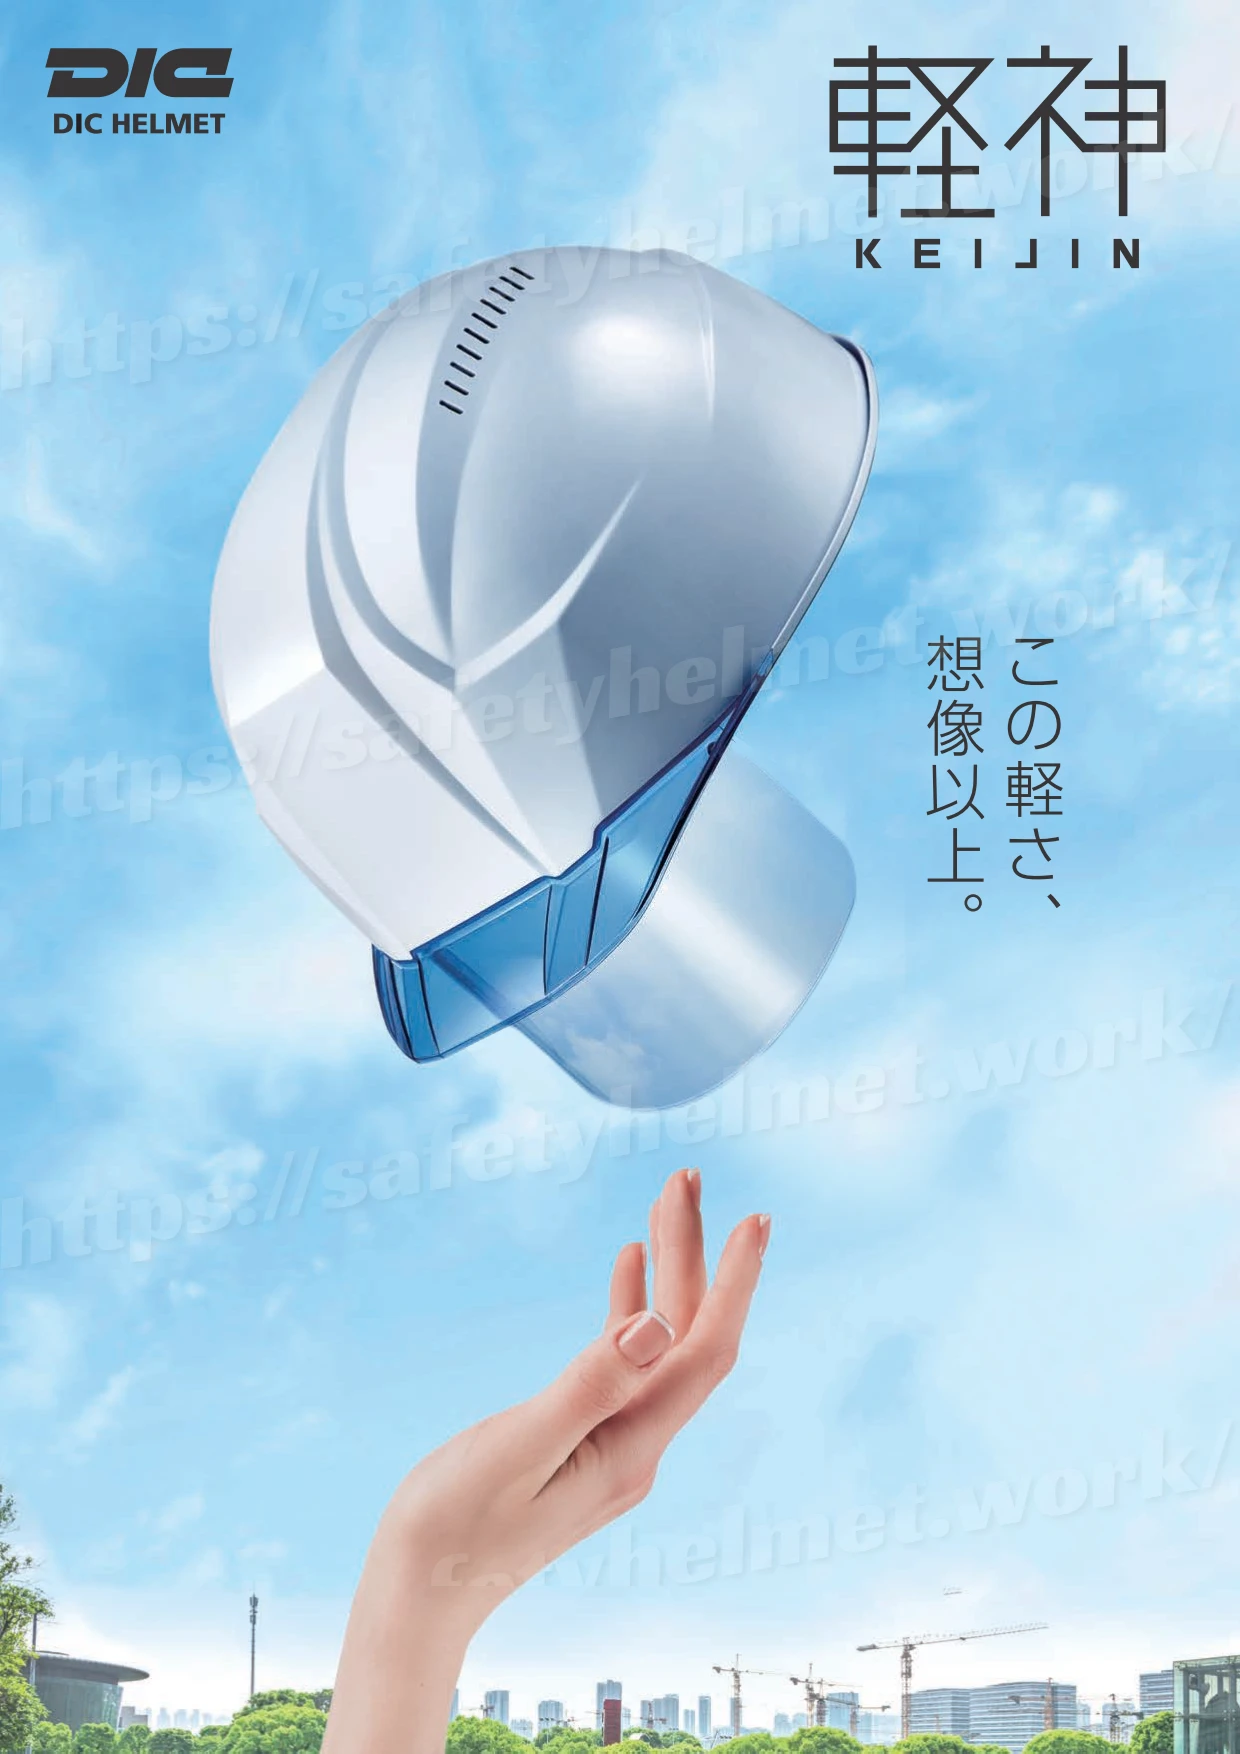 dic-lightest-helmet-keijin-shield-aa23csv-catalog-1